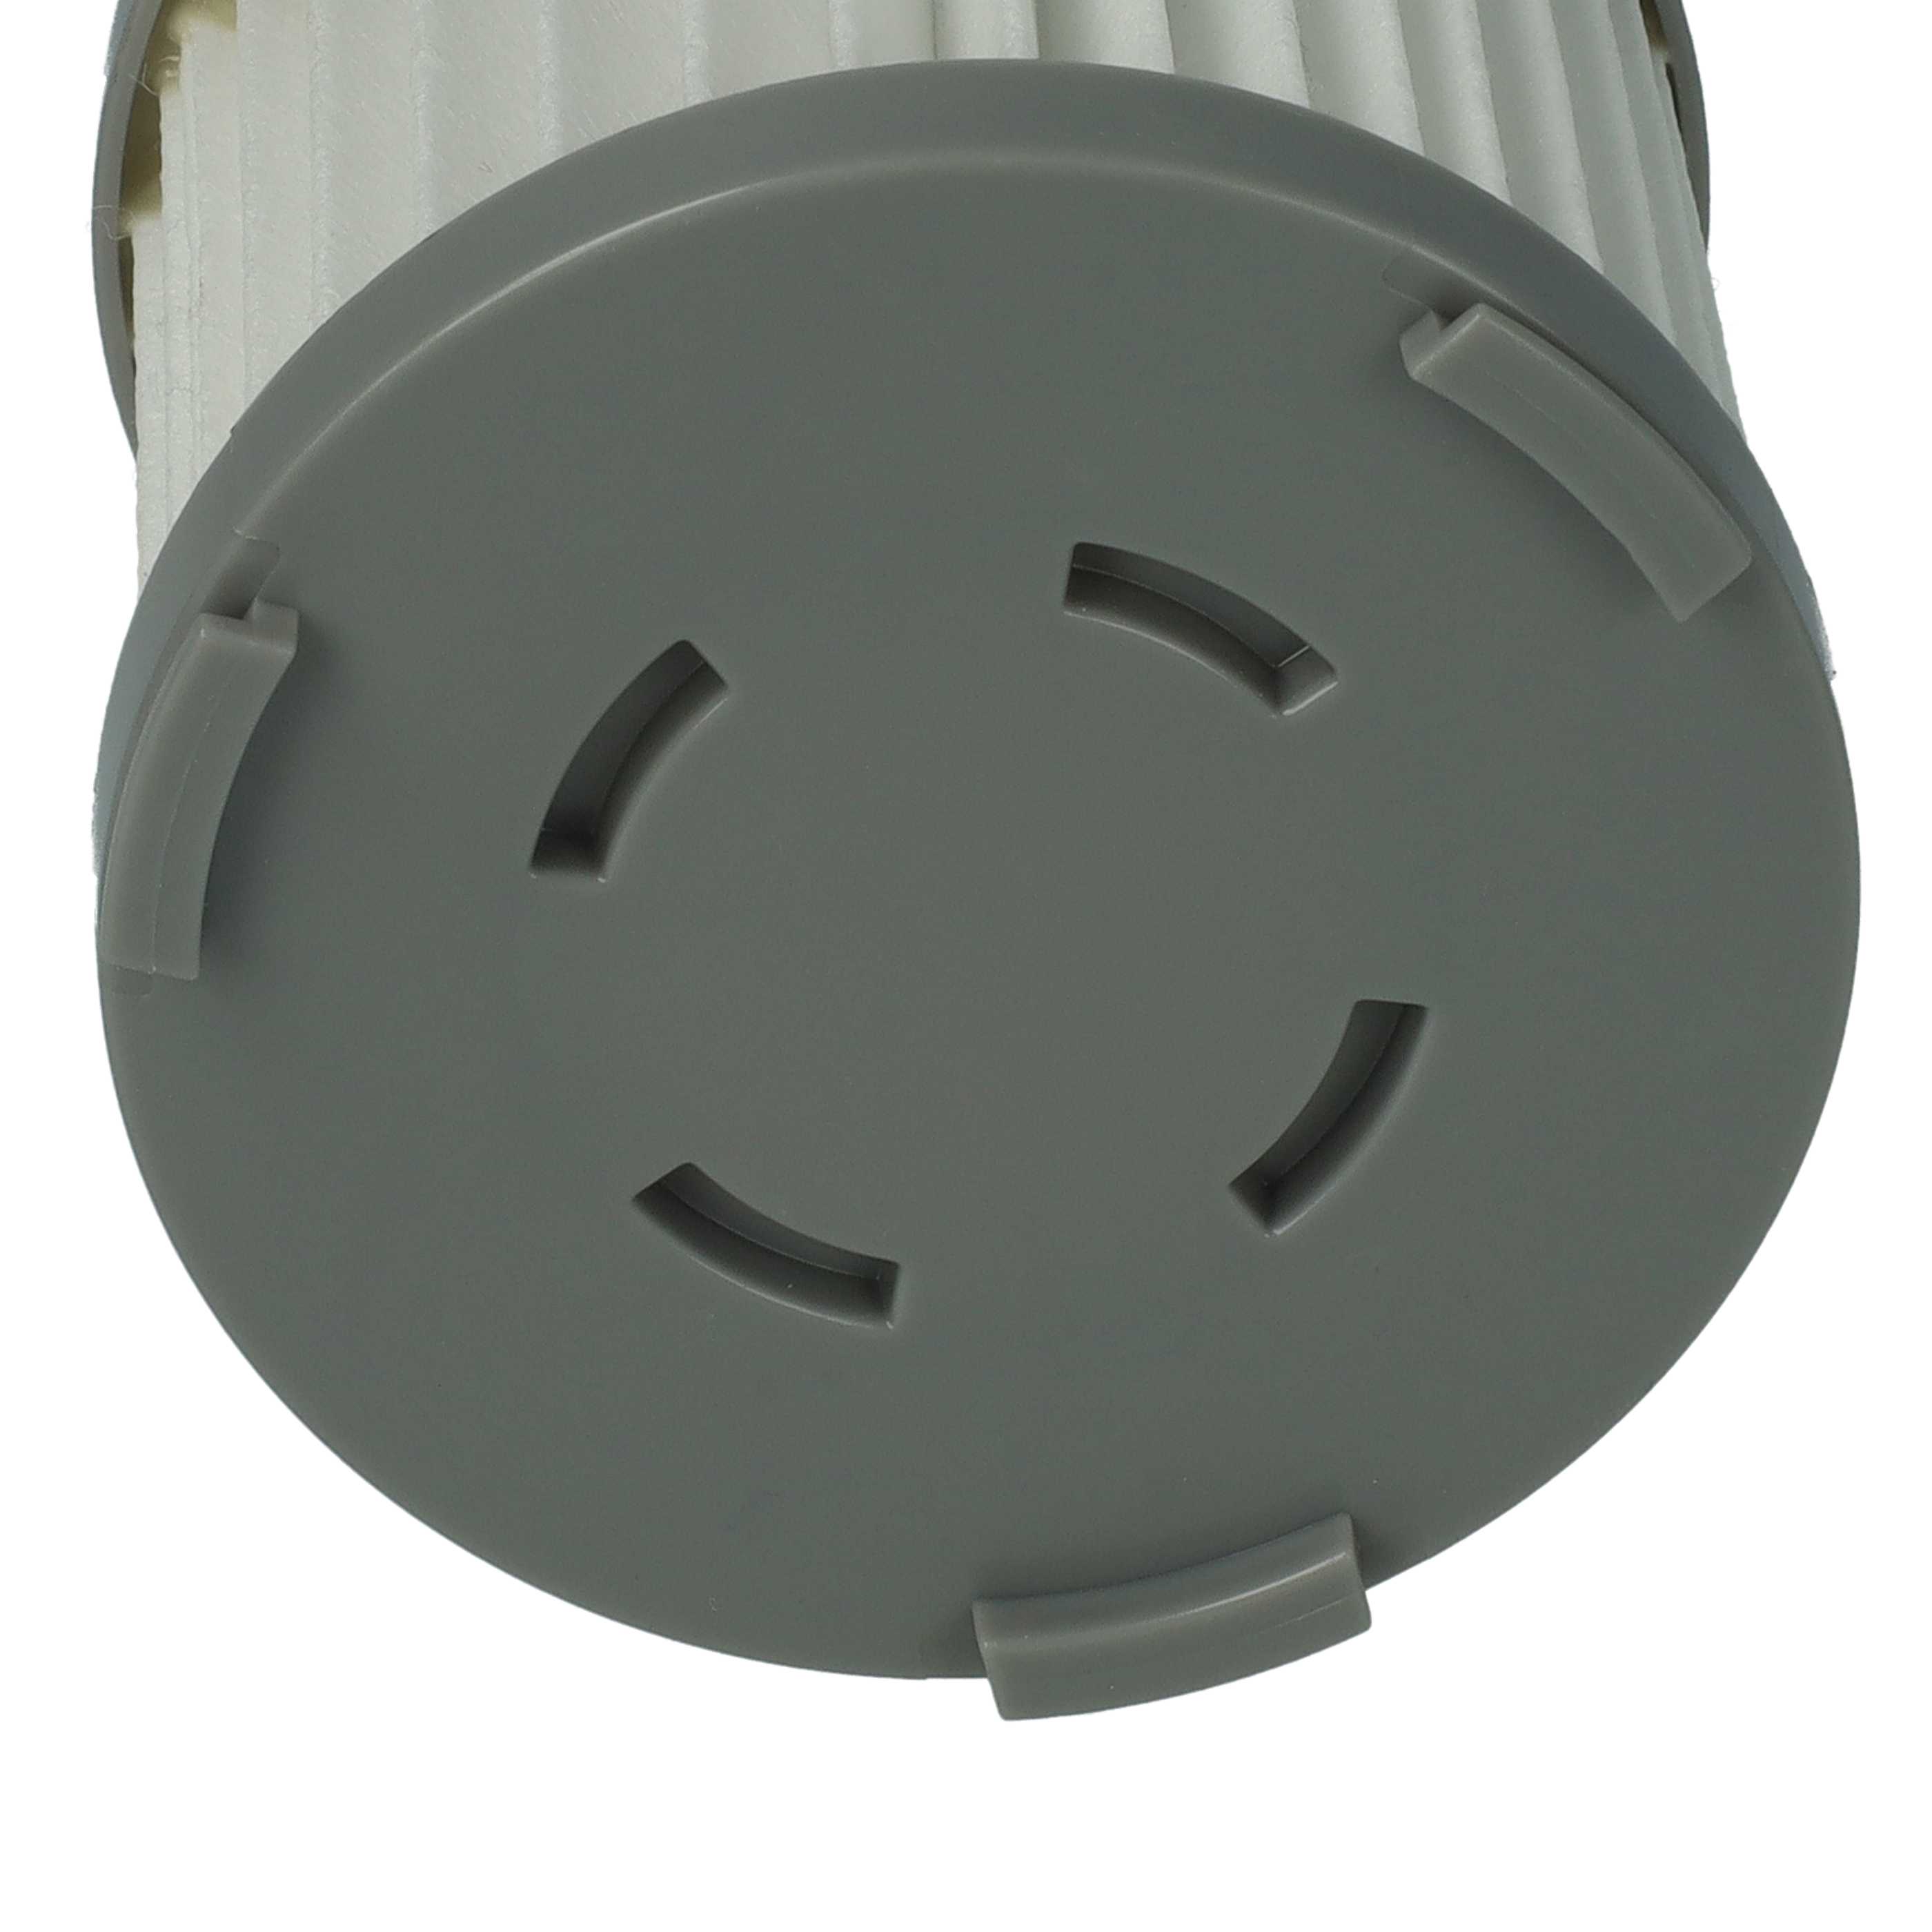 Filtro reemplaza AEG 4055453288 para aspiradora filtro Hepa, blanco / gris